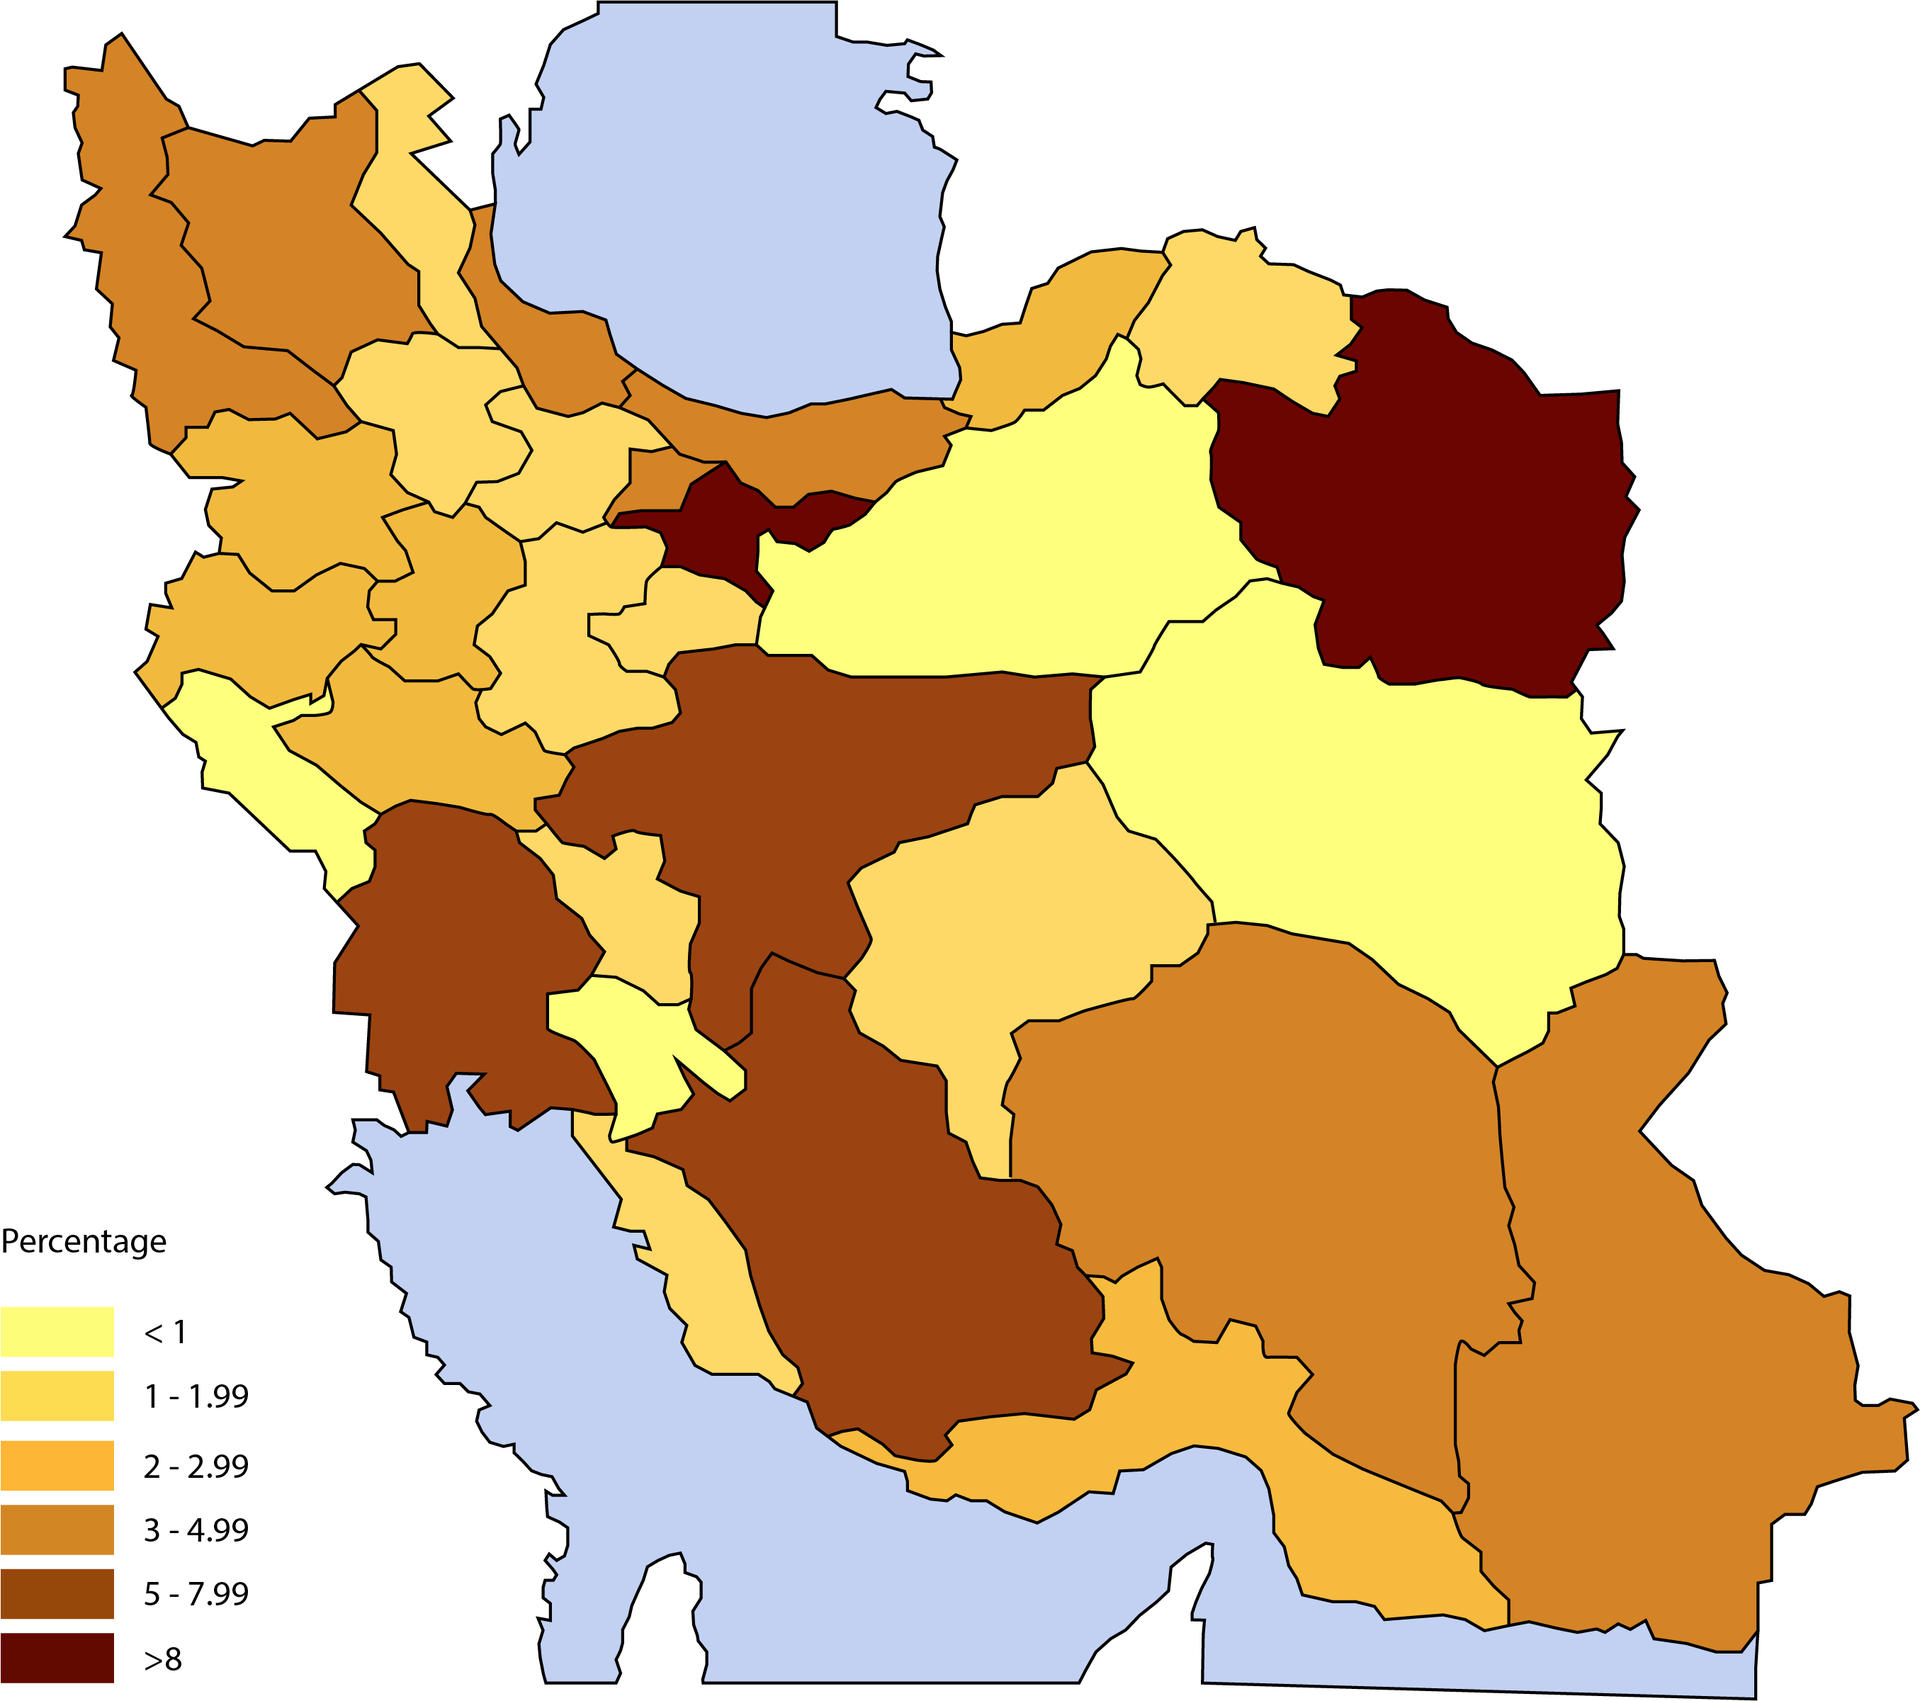 Population Distribution